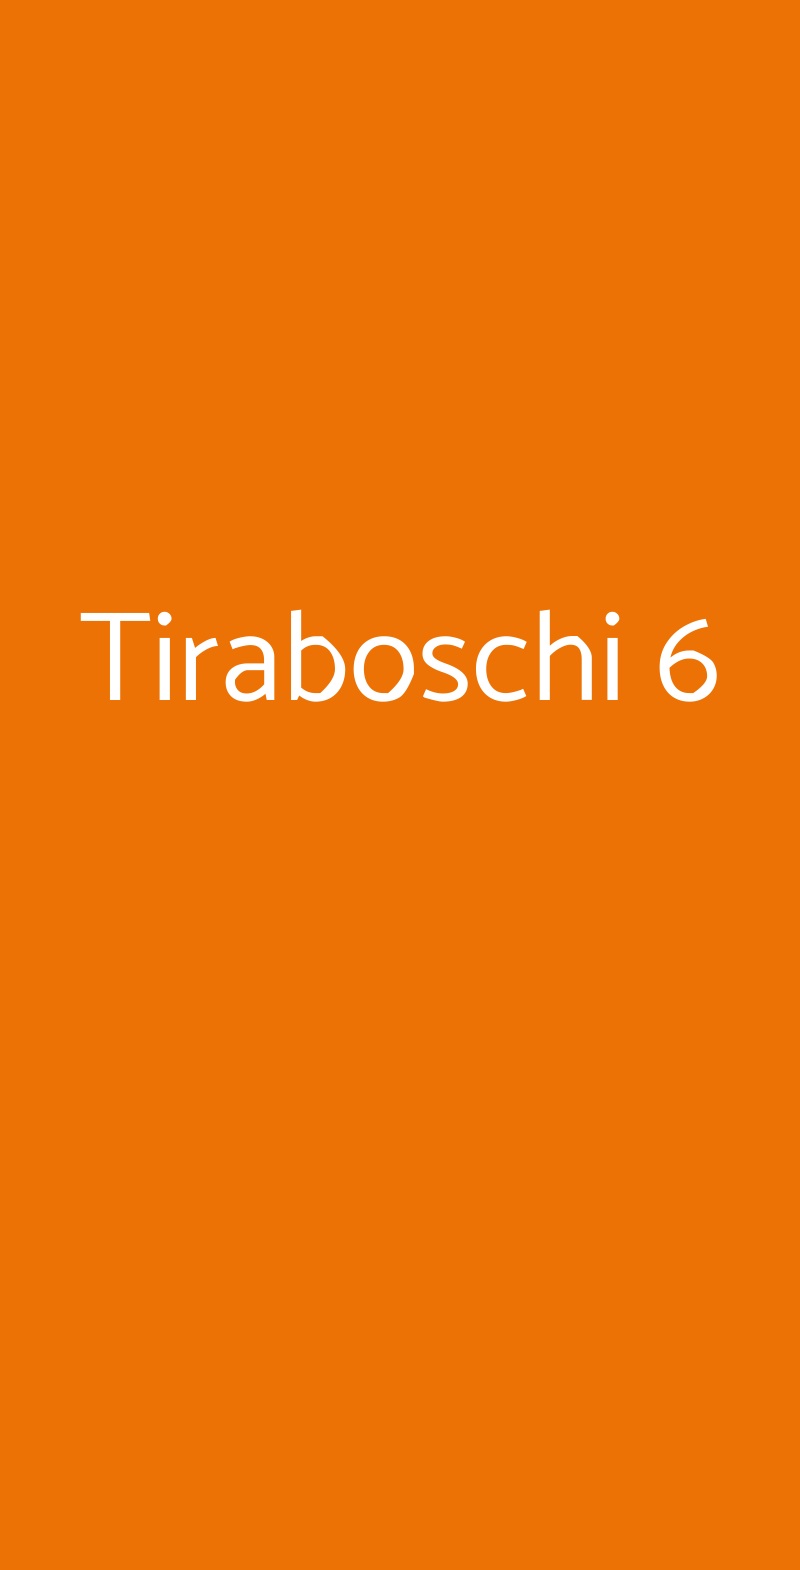 Tiraboschi 6 Milano menù 1 pagina